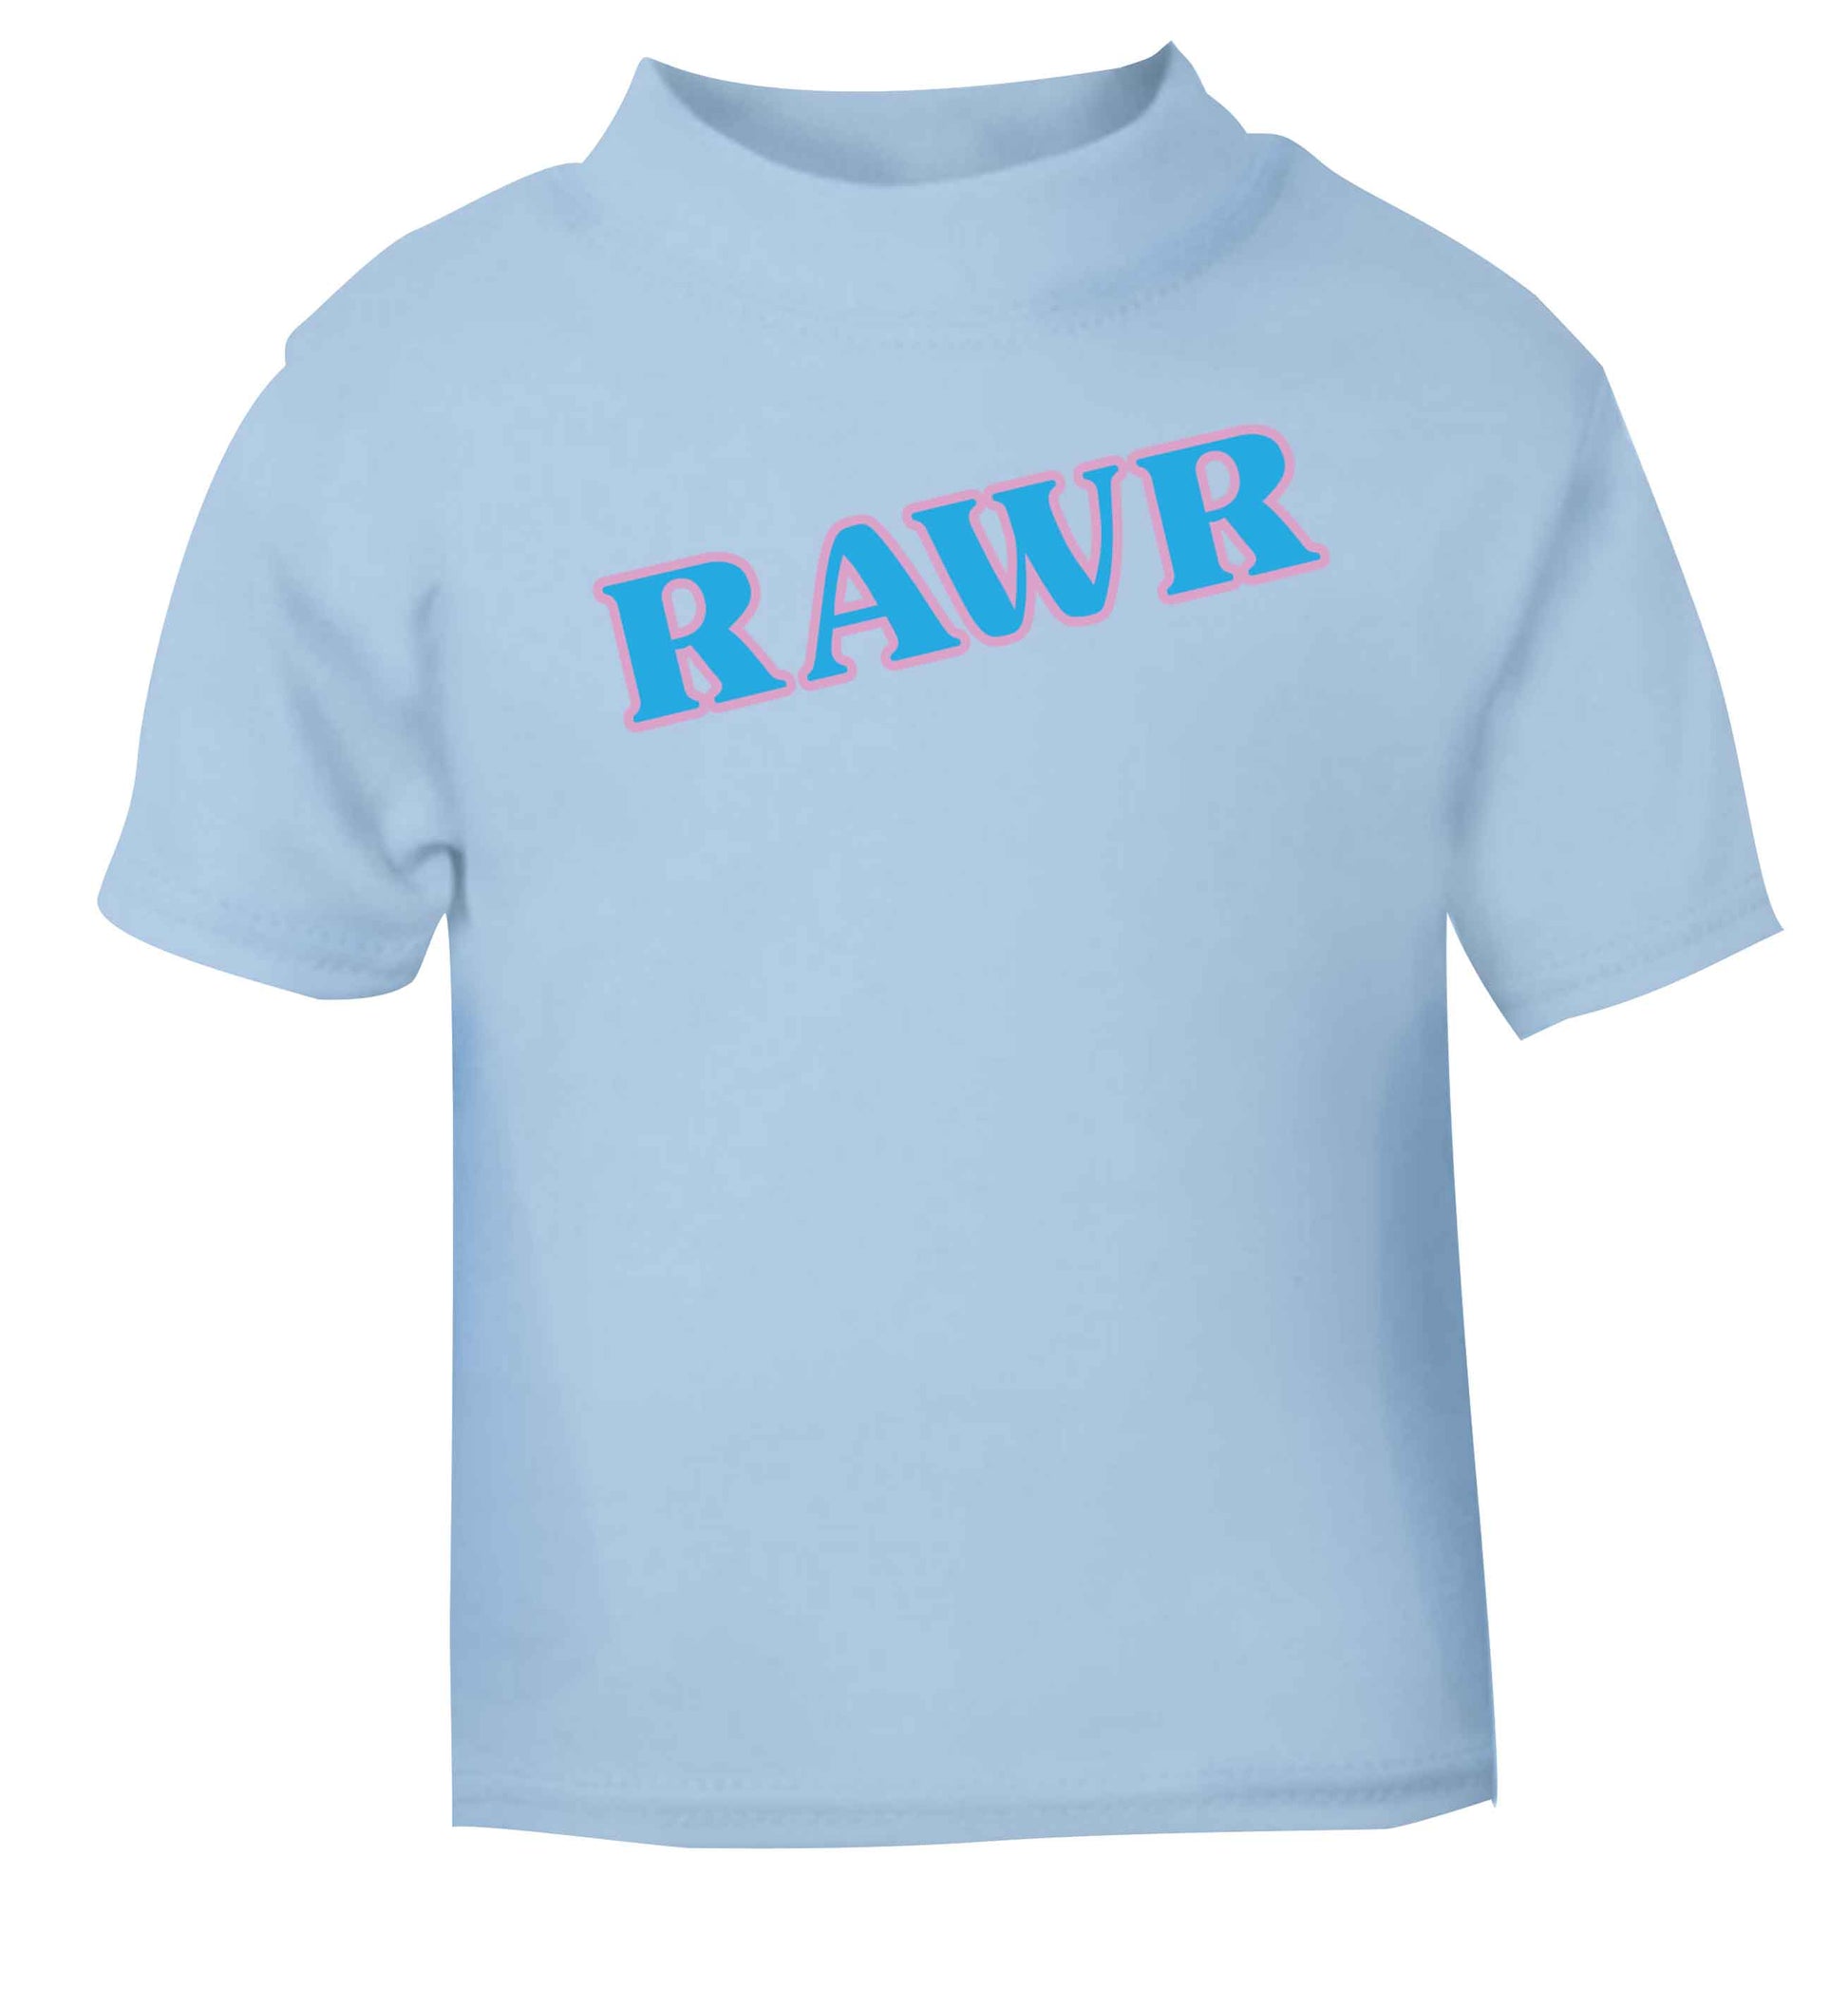 Rawr light blue baby toddler Tshirt 2 Years